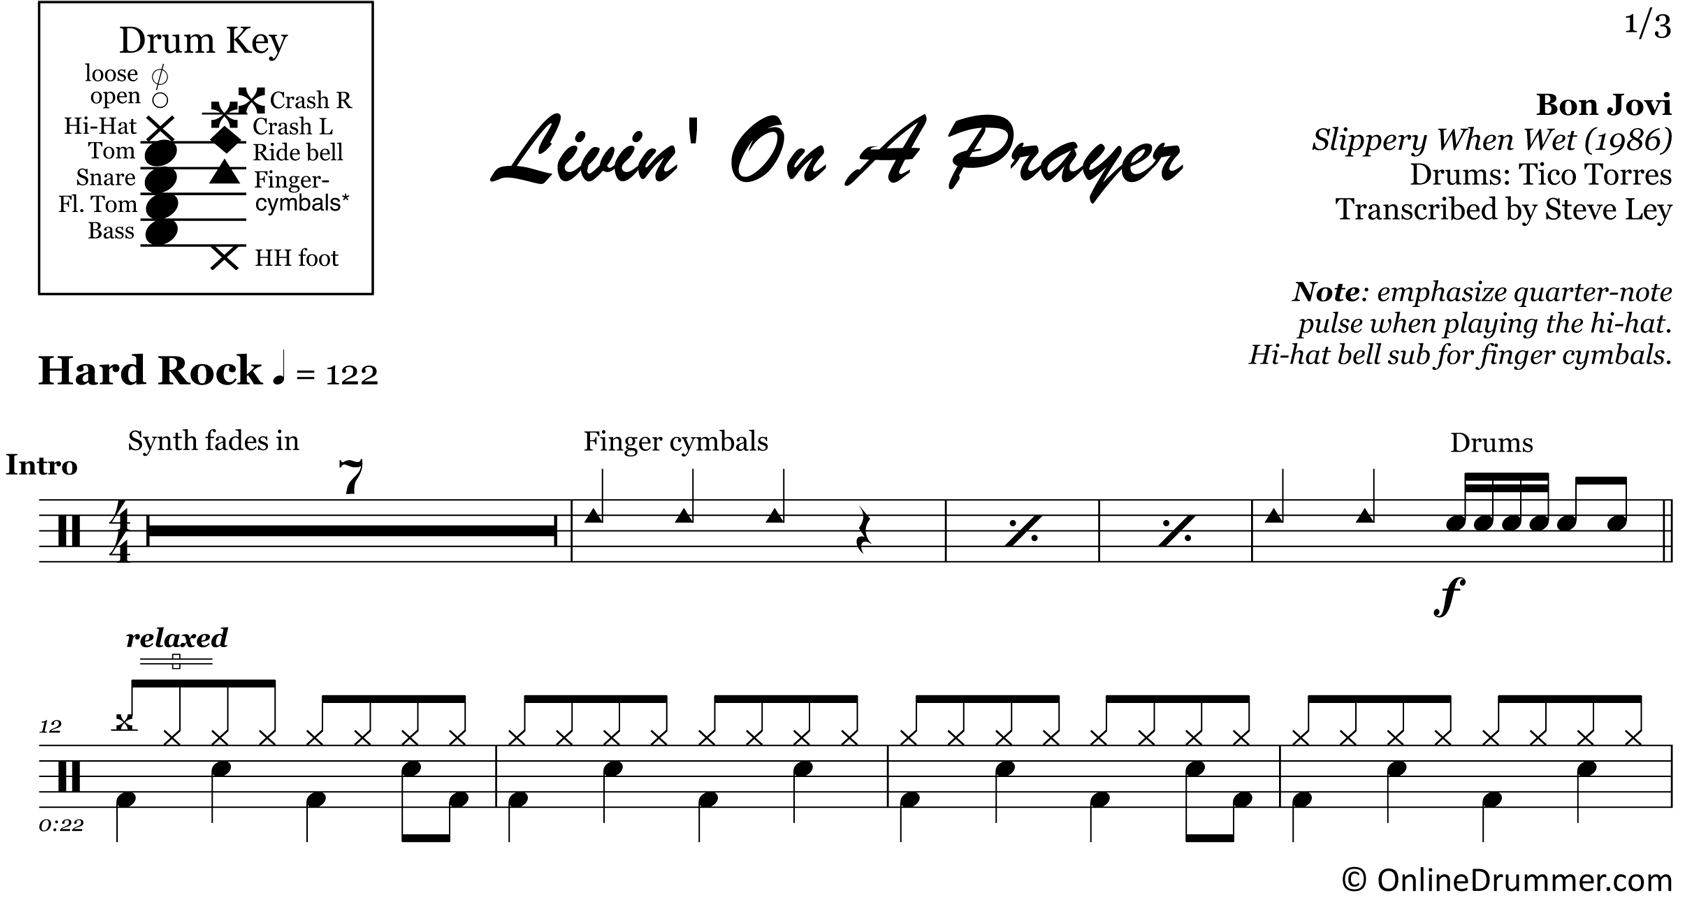 Living on a prayer (1986) – bon jovi – всё о песне | fuzz music